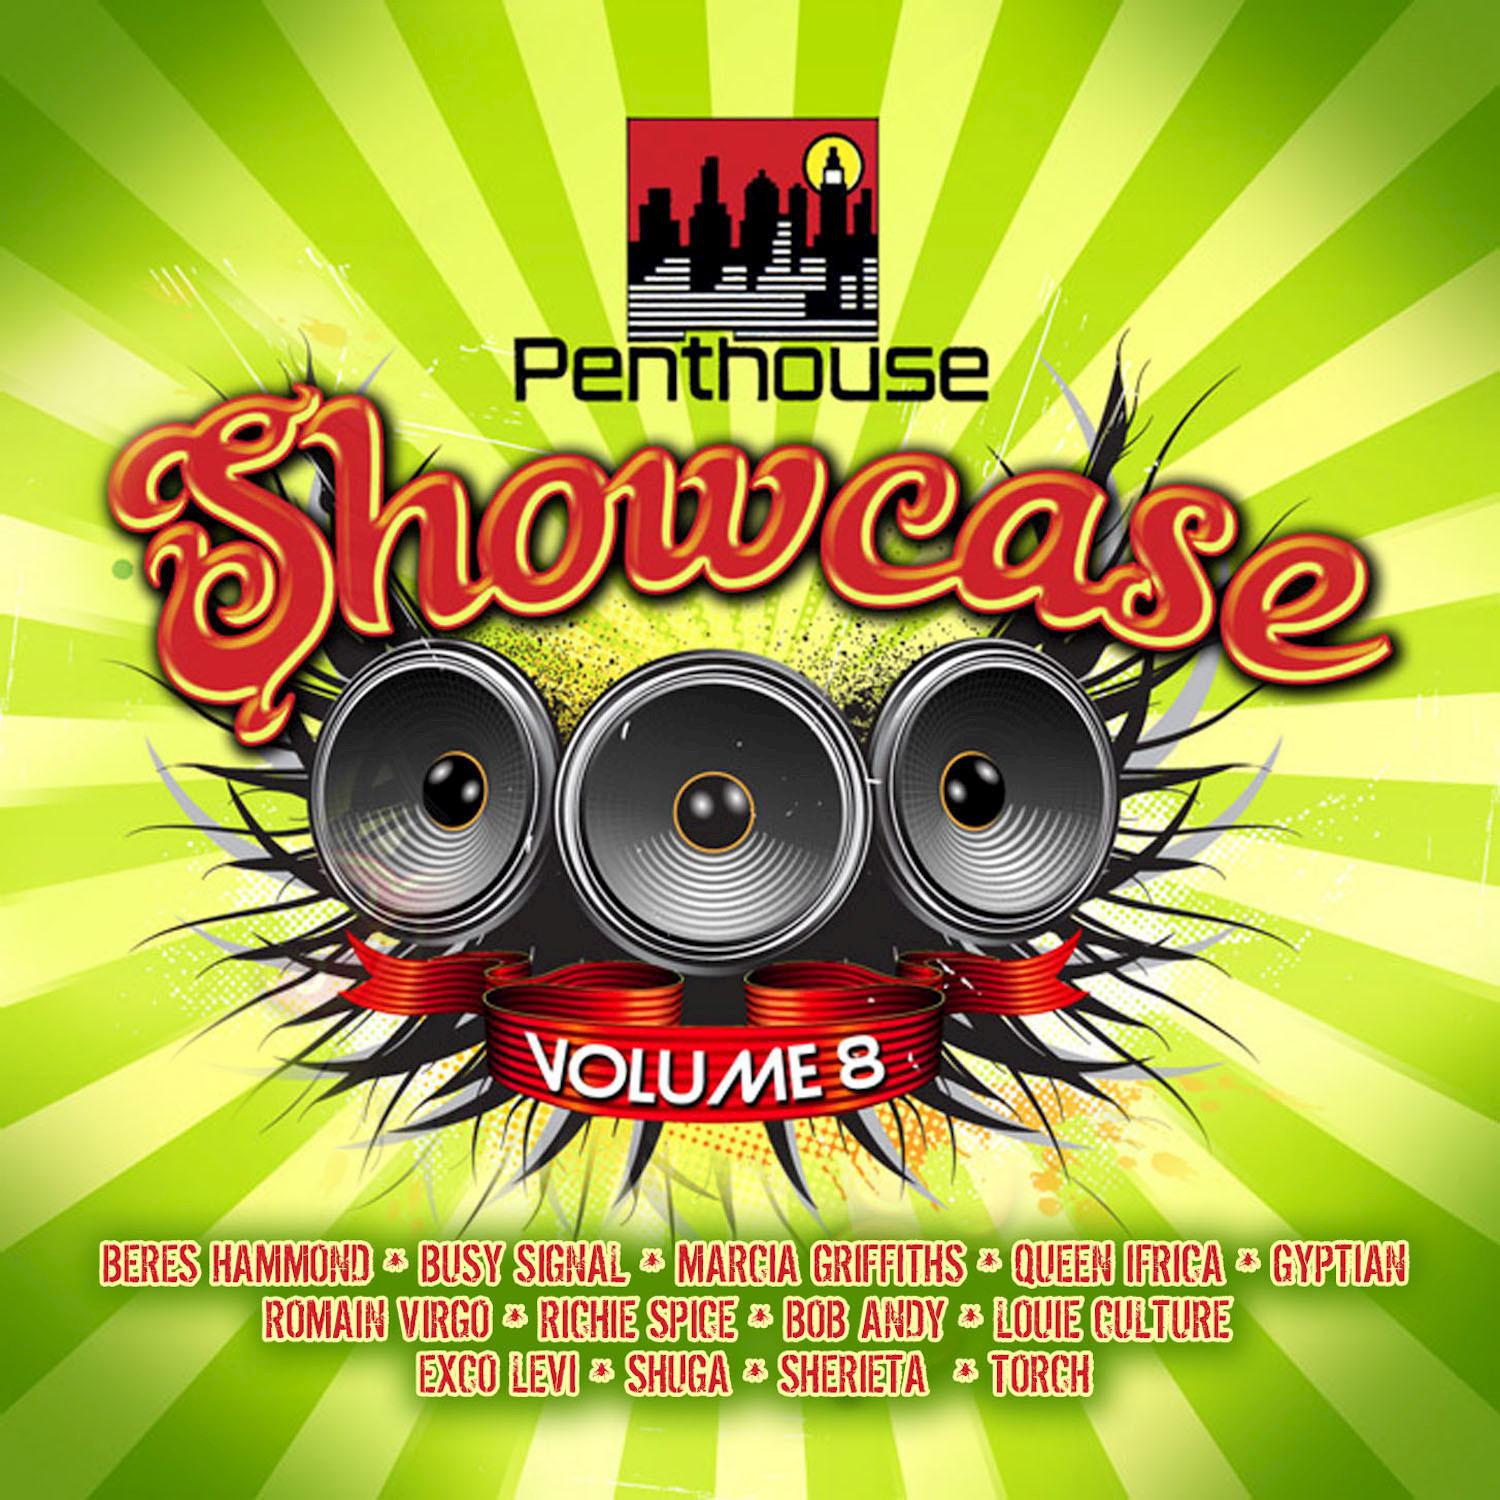 Penthouse Showcase, Vol. 8